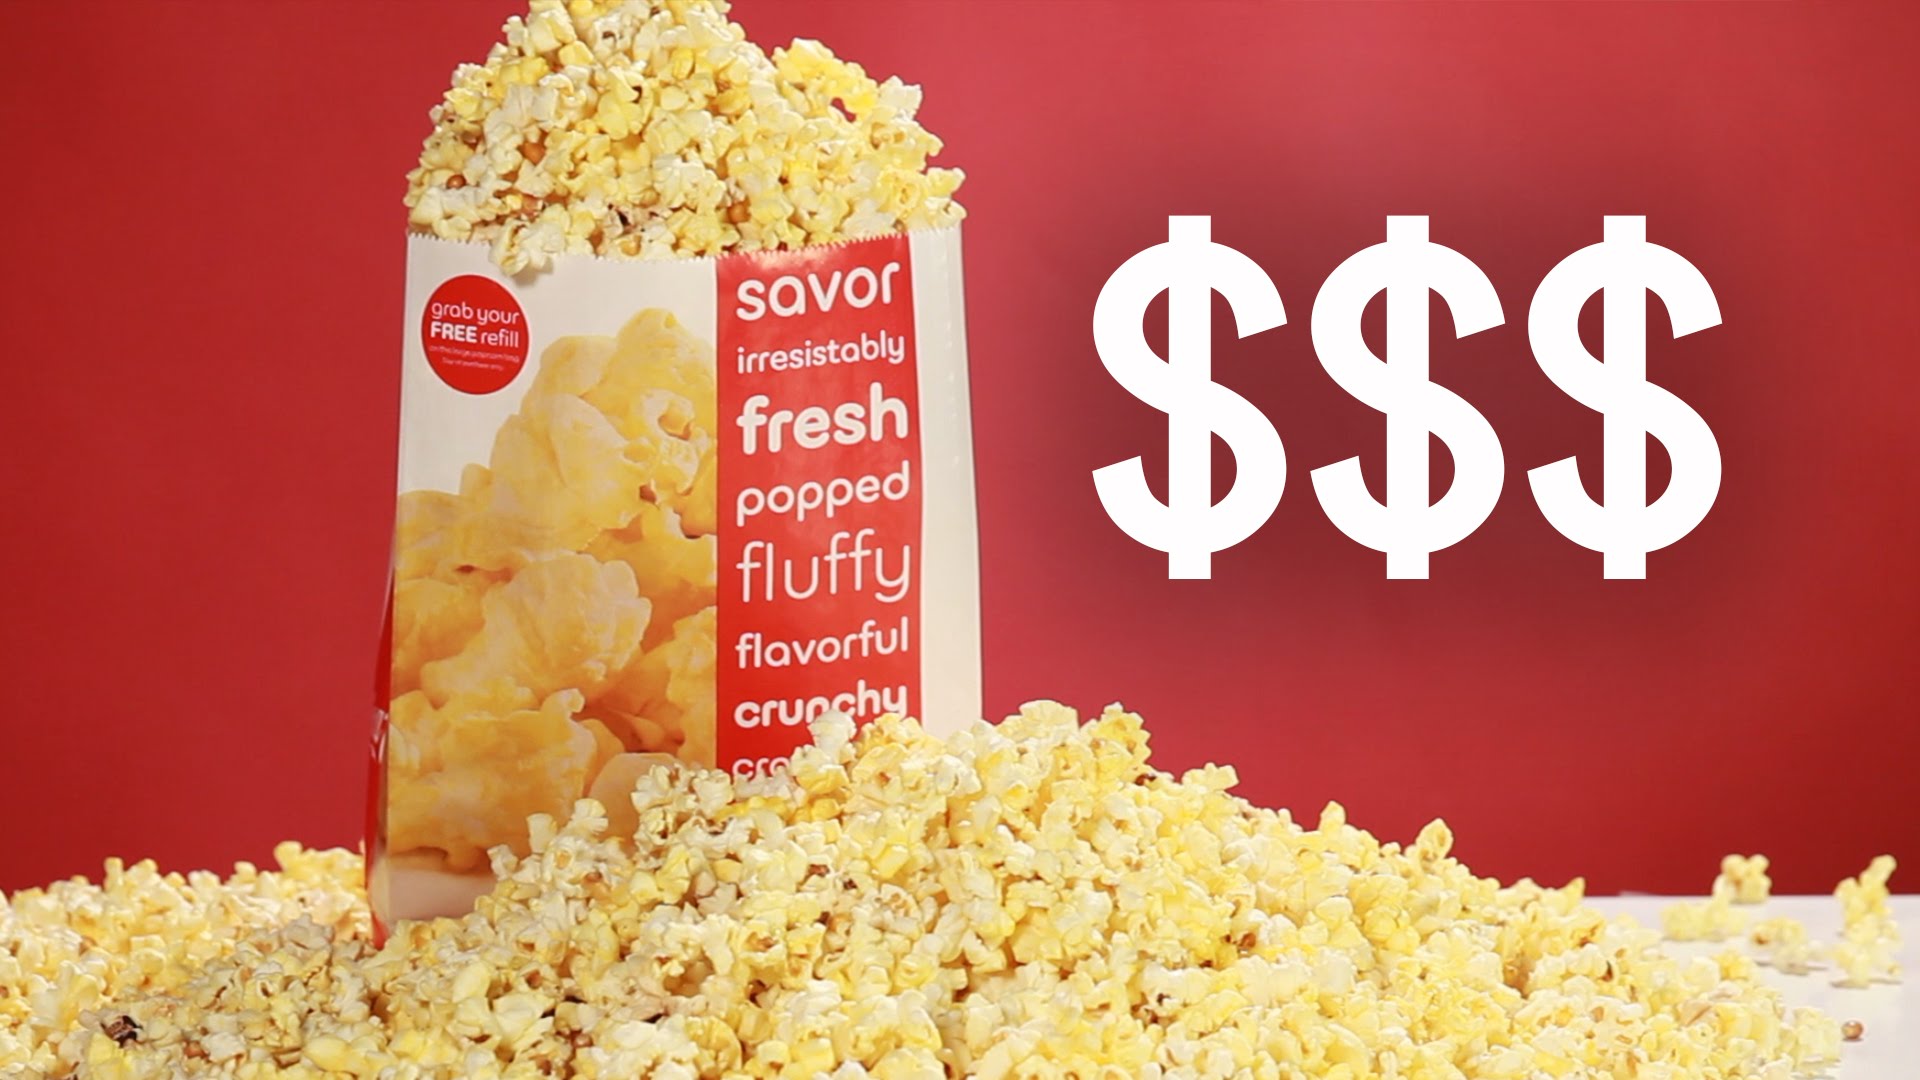 Popcorn at cinema photo